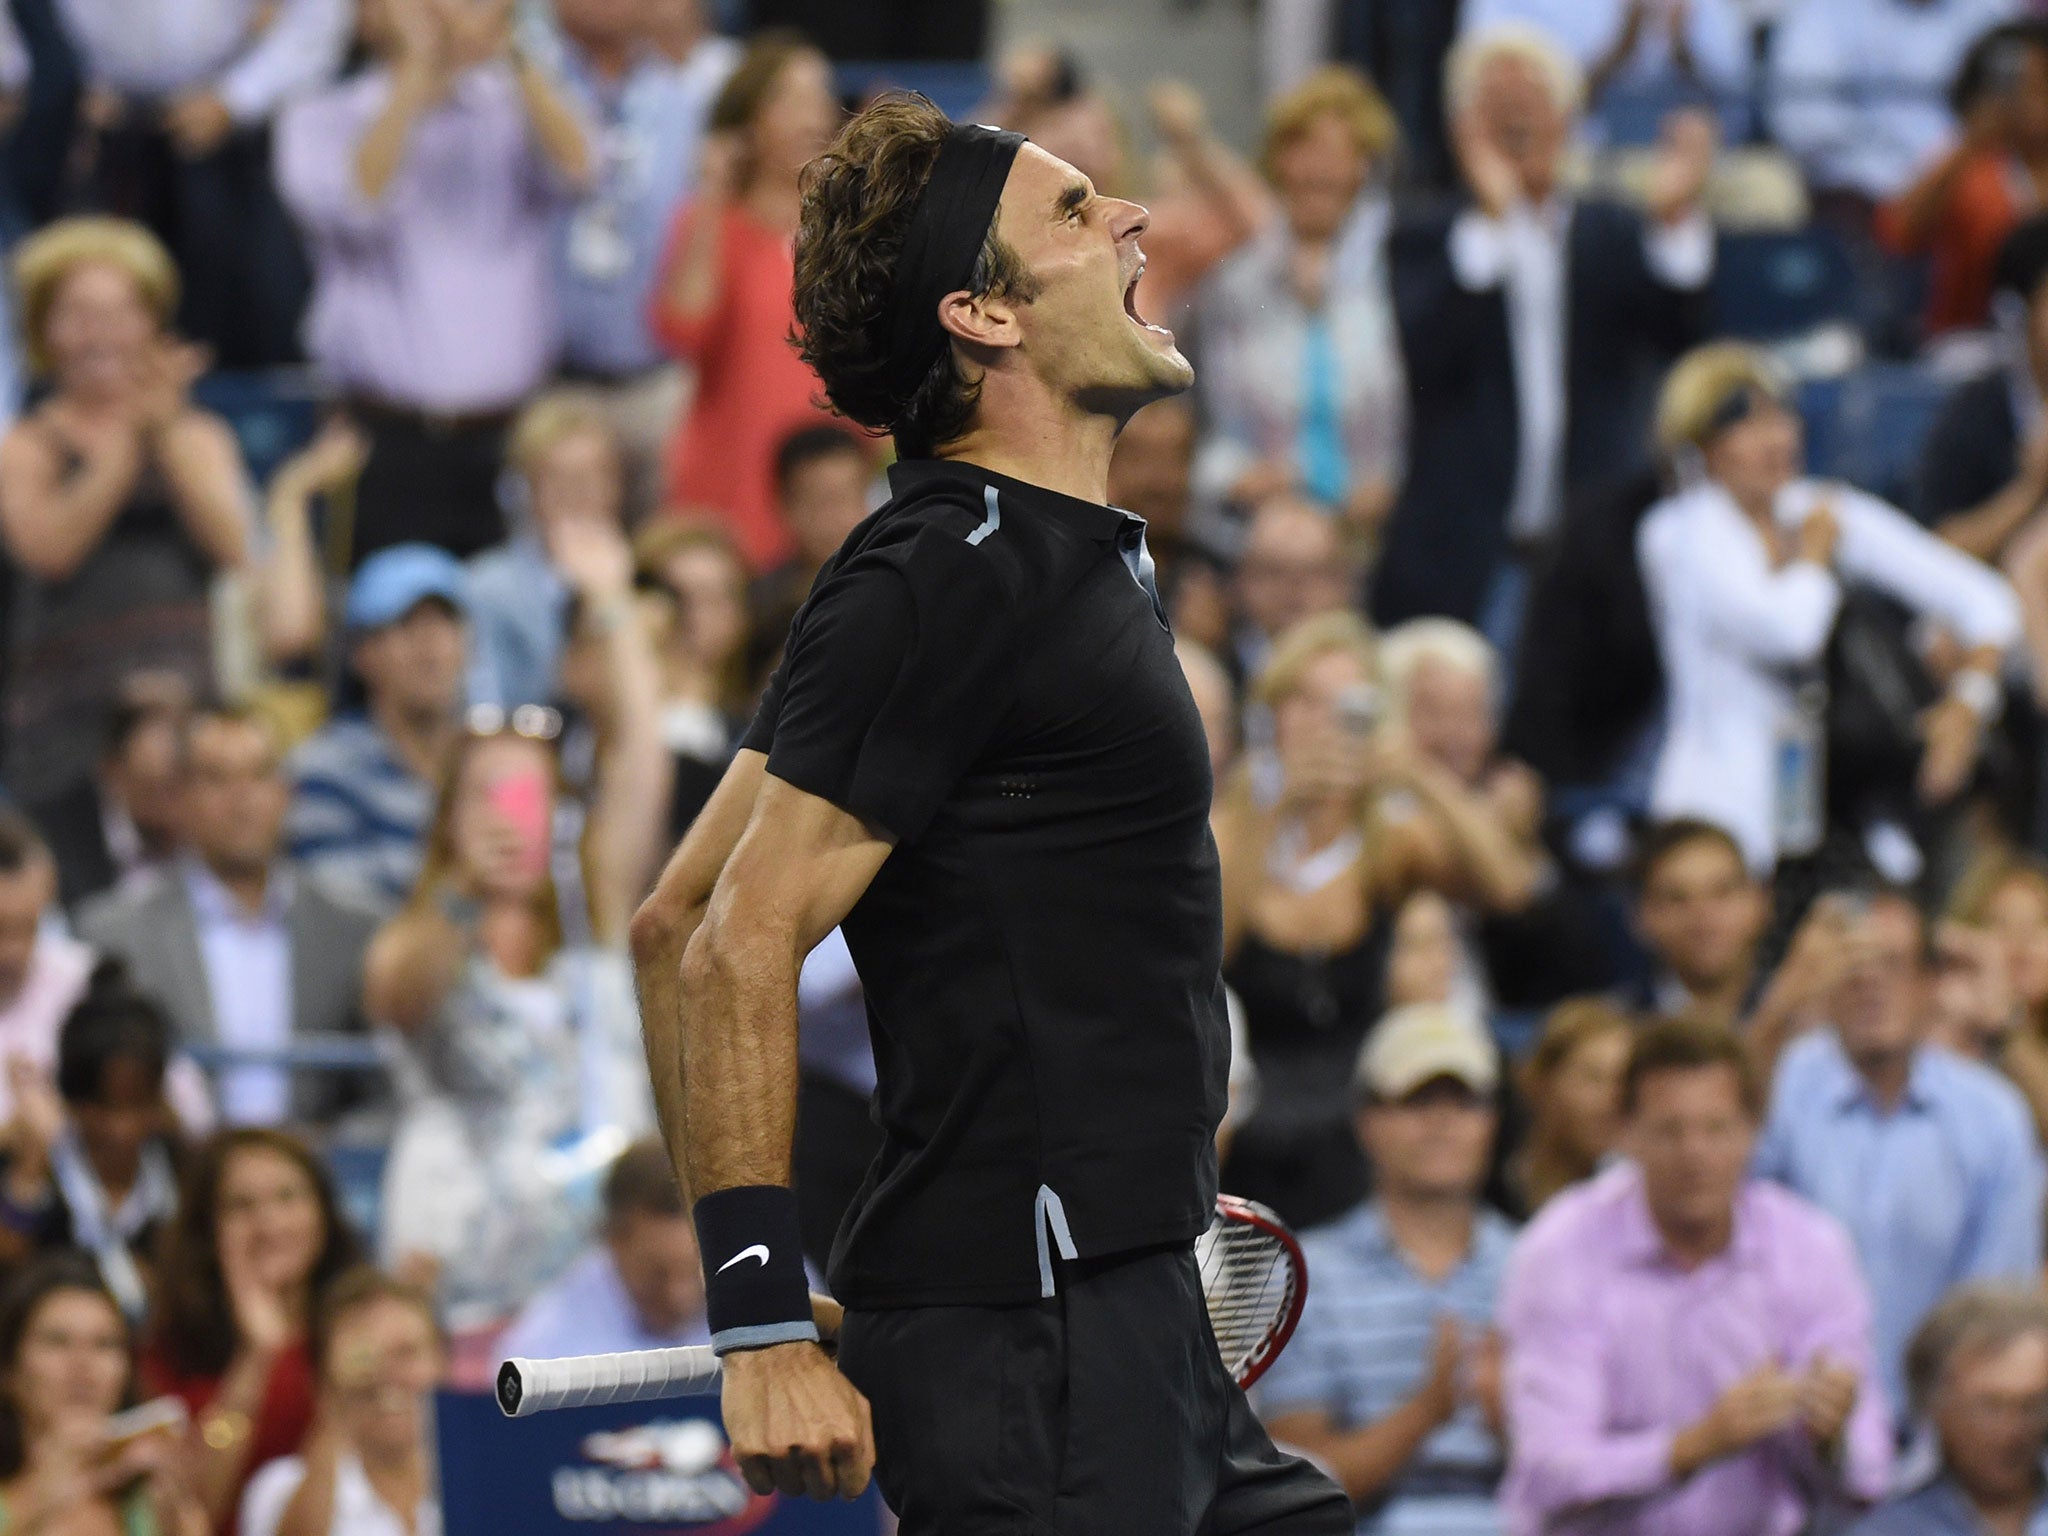 Roger Federer celebrates victory over Gael Monfils at the US Open